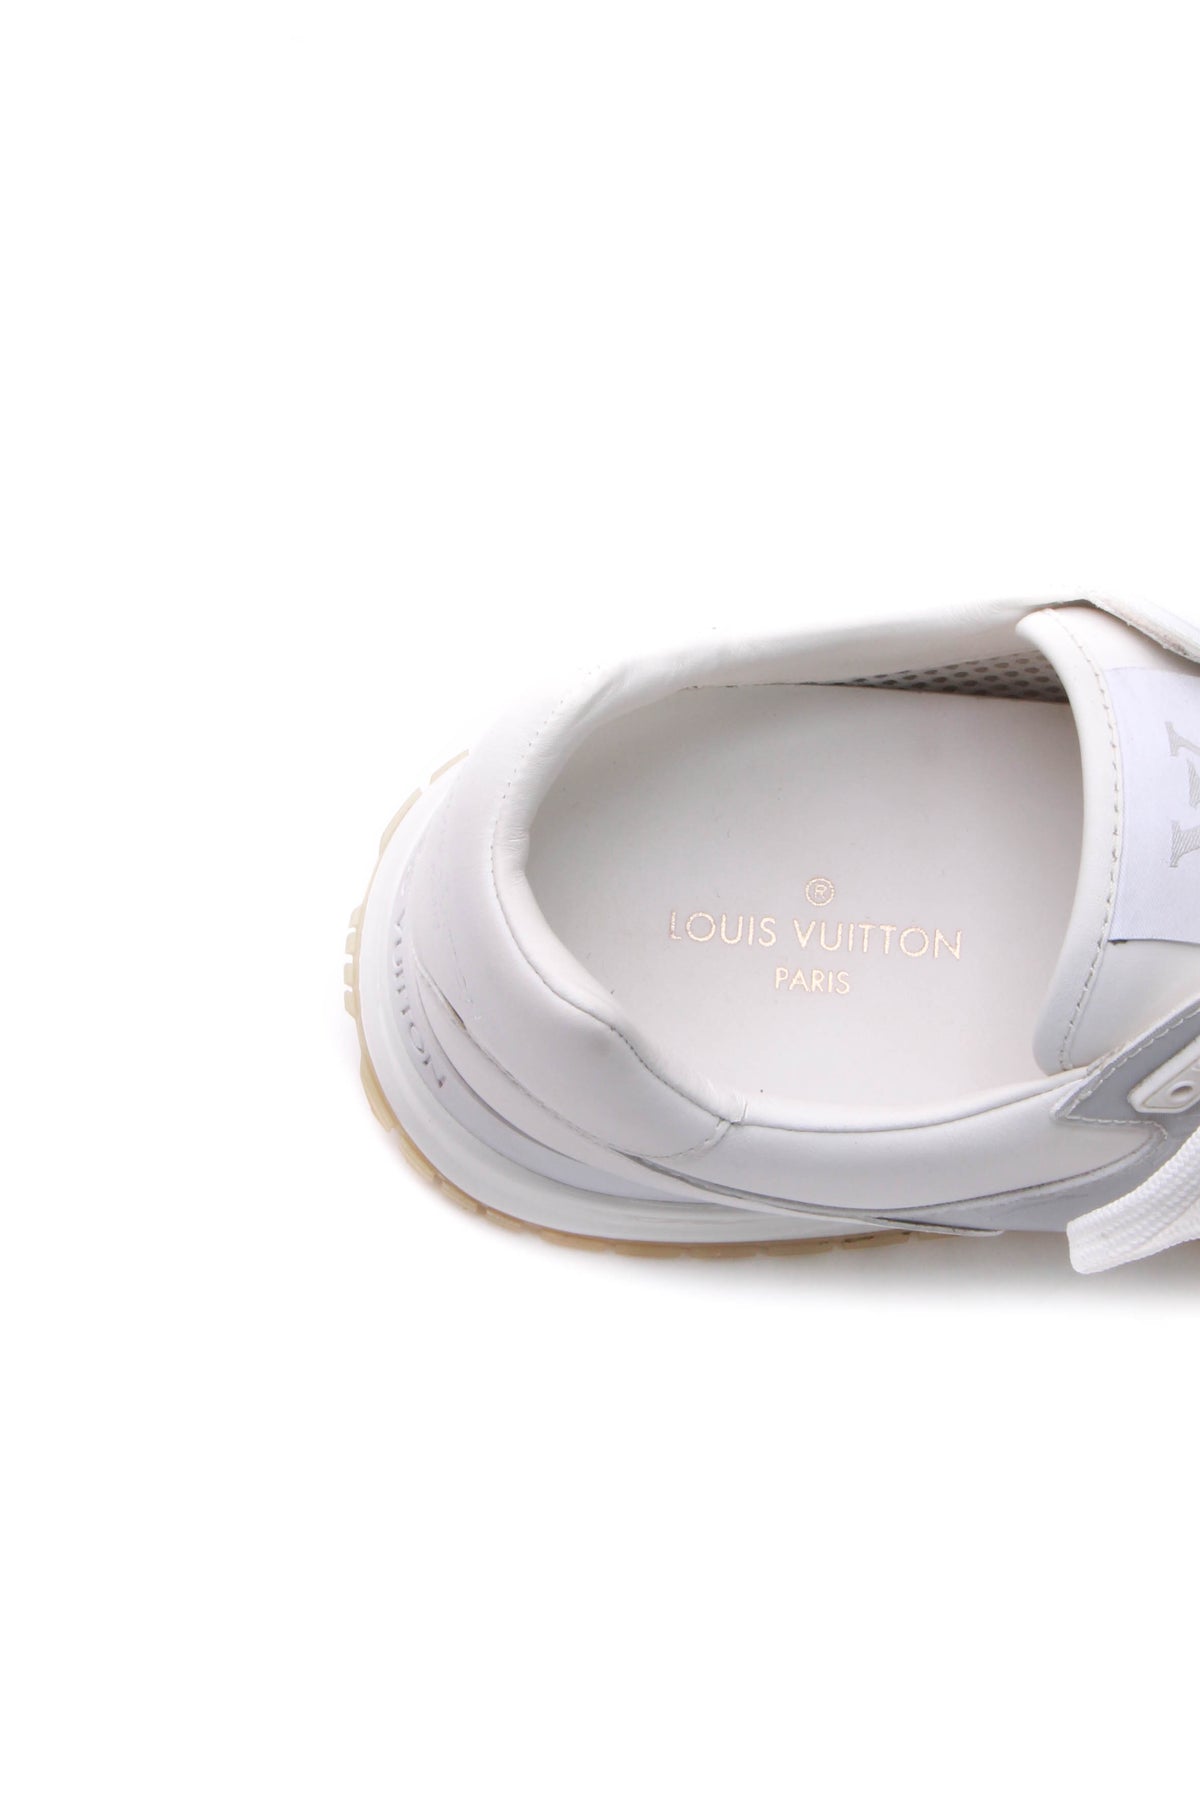 Louis Vuitton Trocadero Printed Men's Sneakers - US Size 8